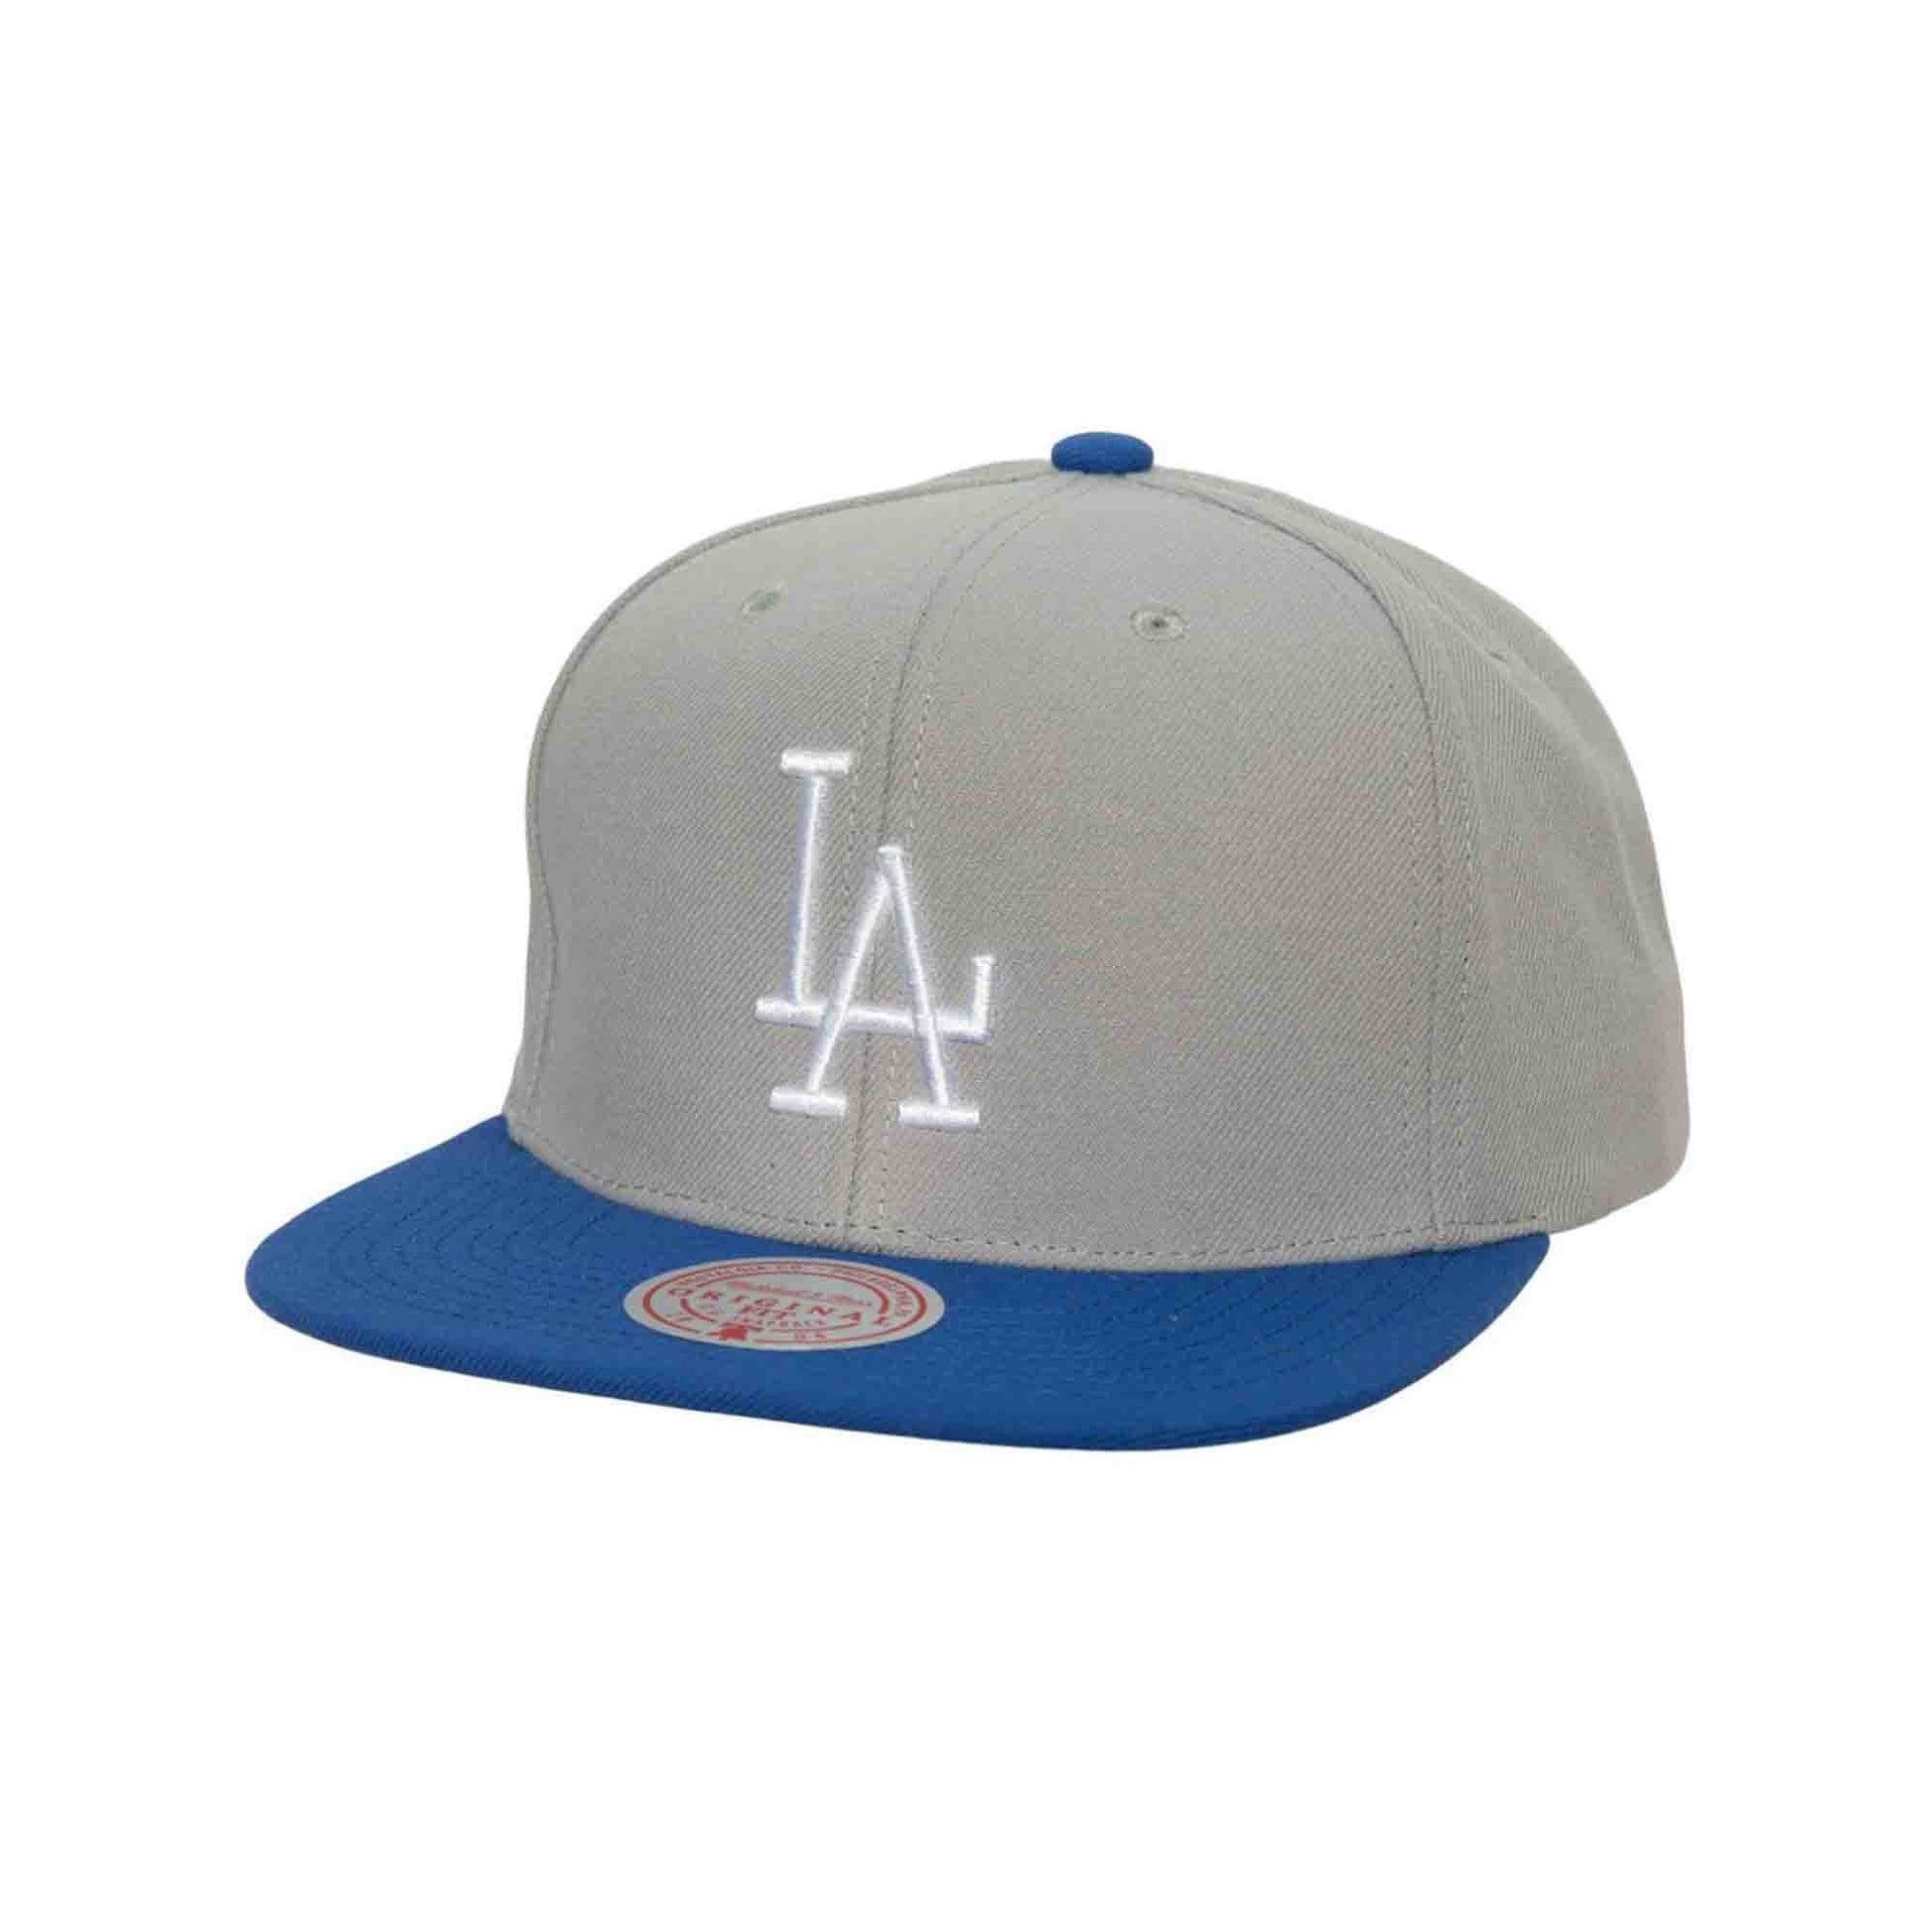 Away Snapback Coop Los Angeles Dodgers